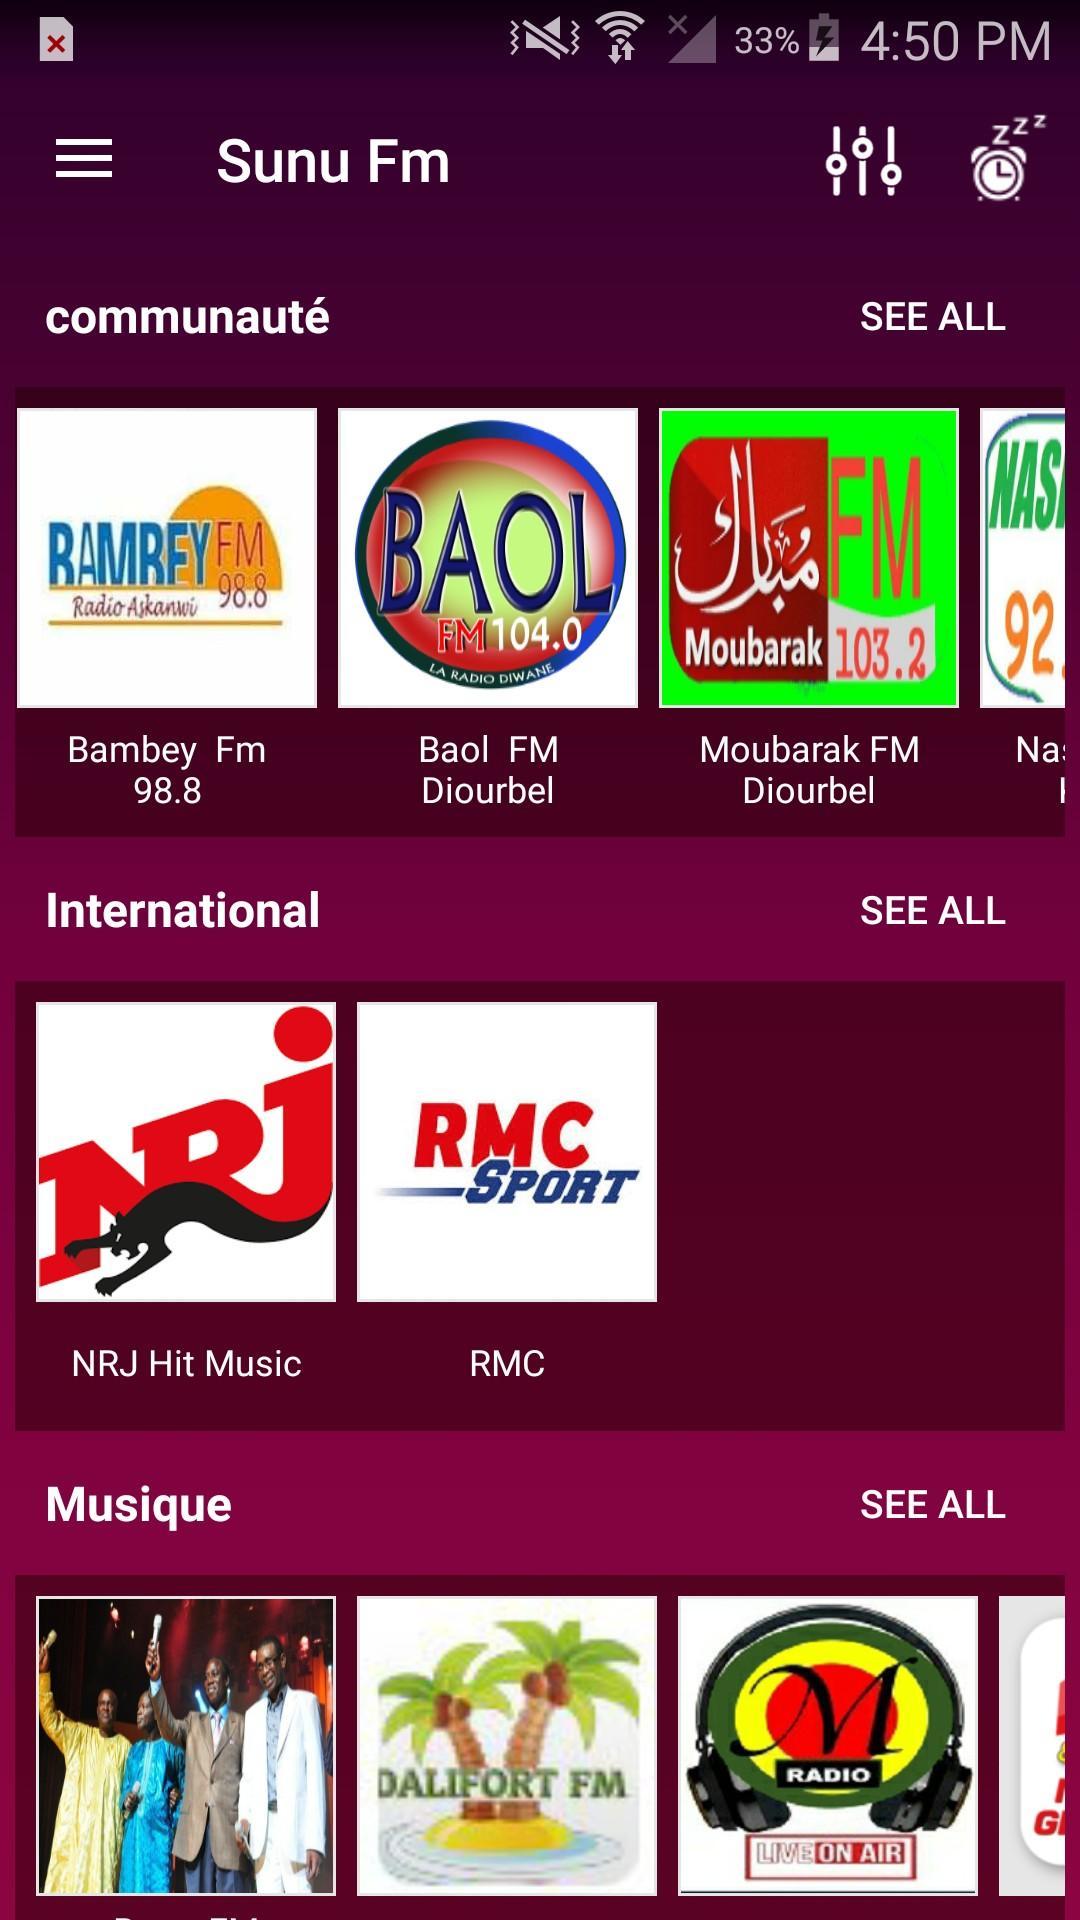 SUNU FM for Android - APK Download